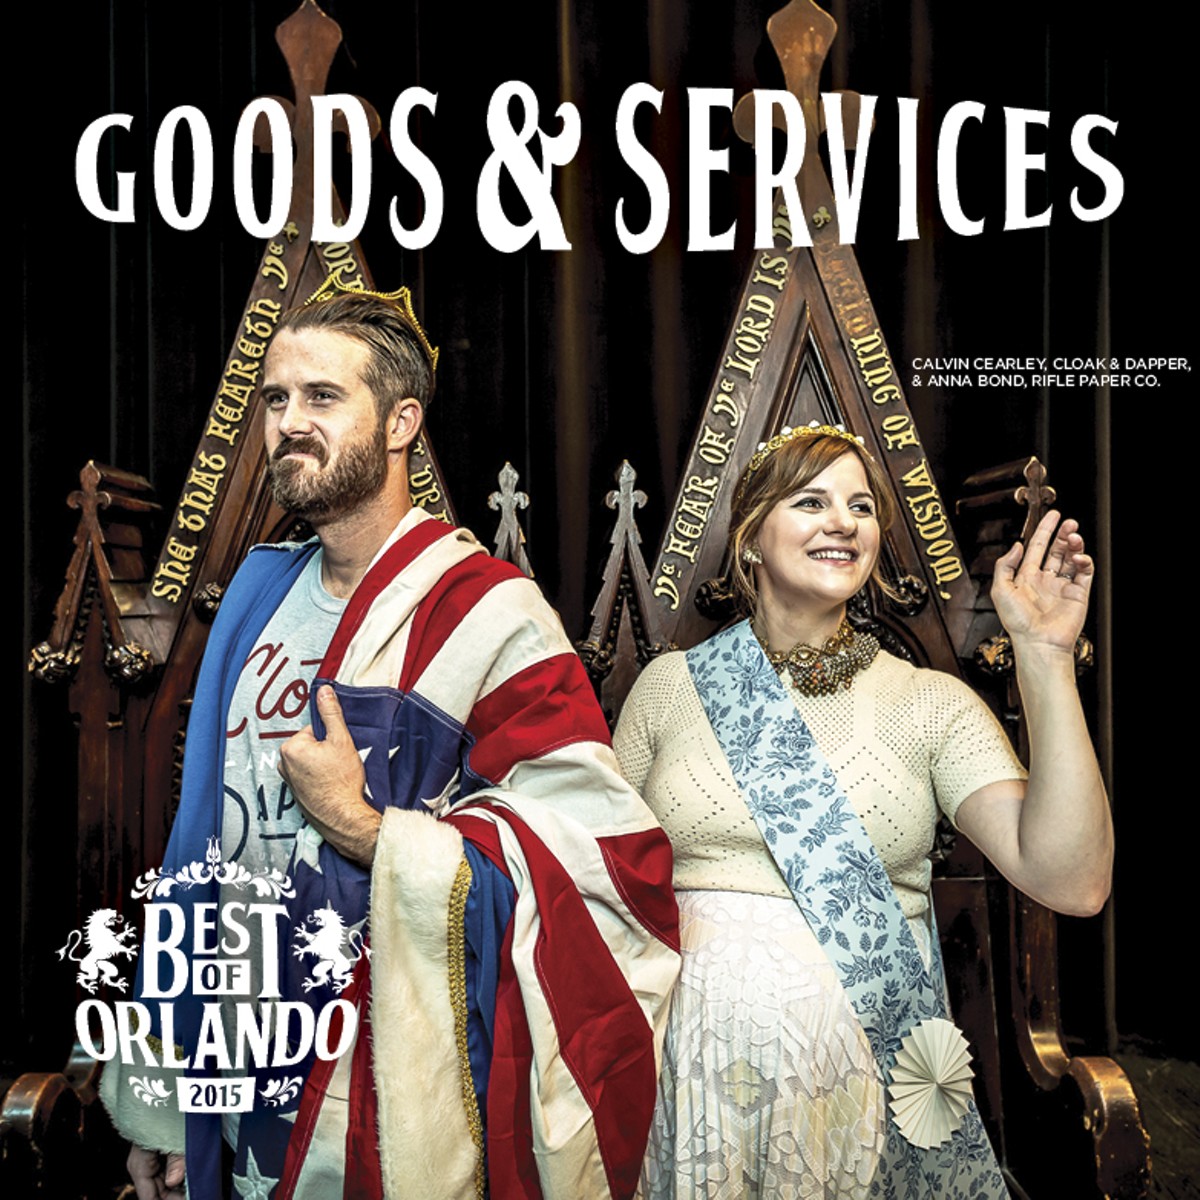 Goods & Services